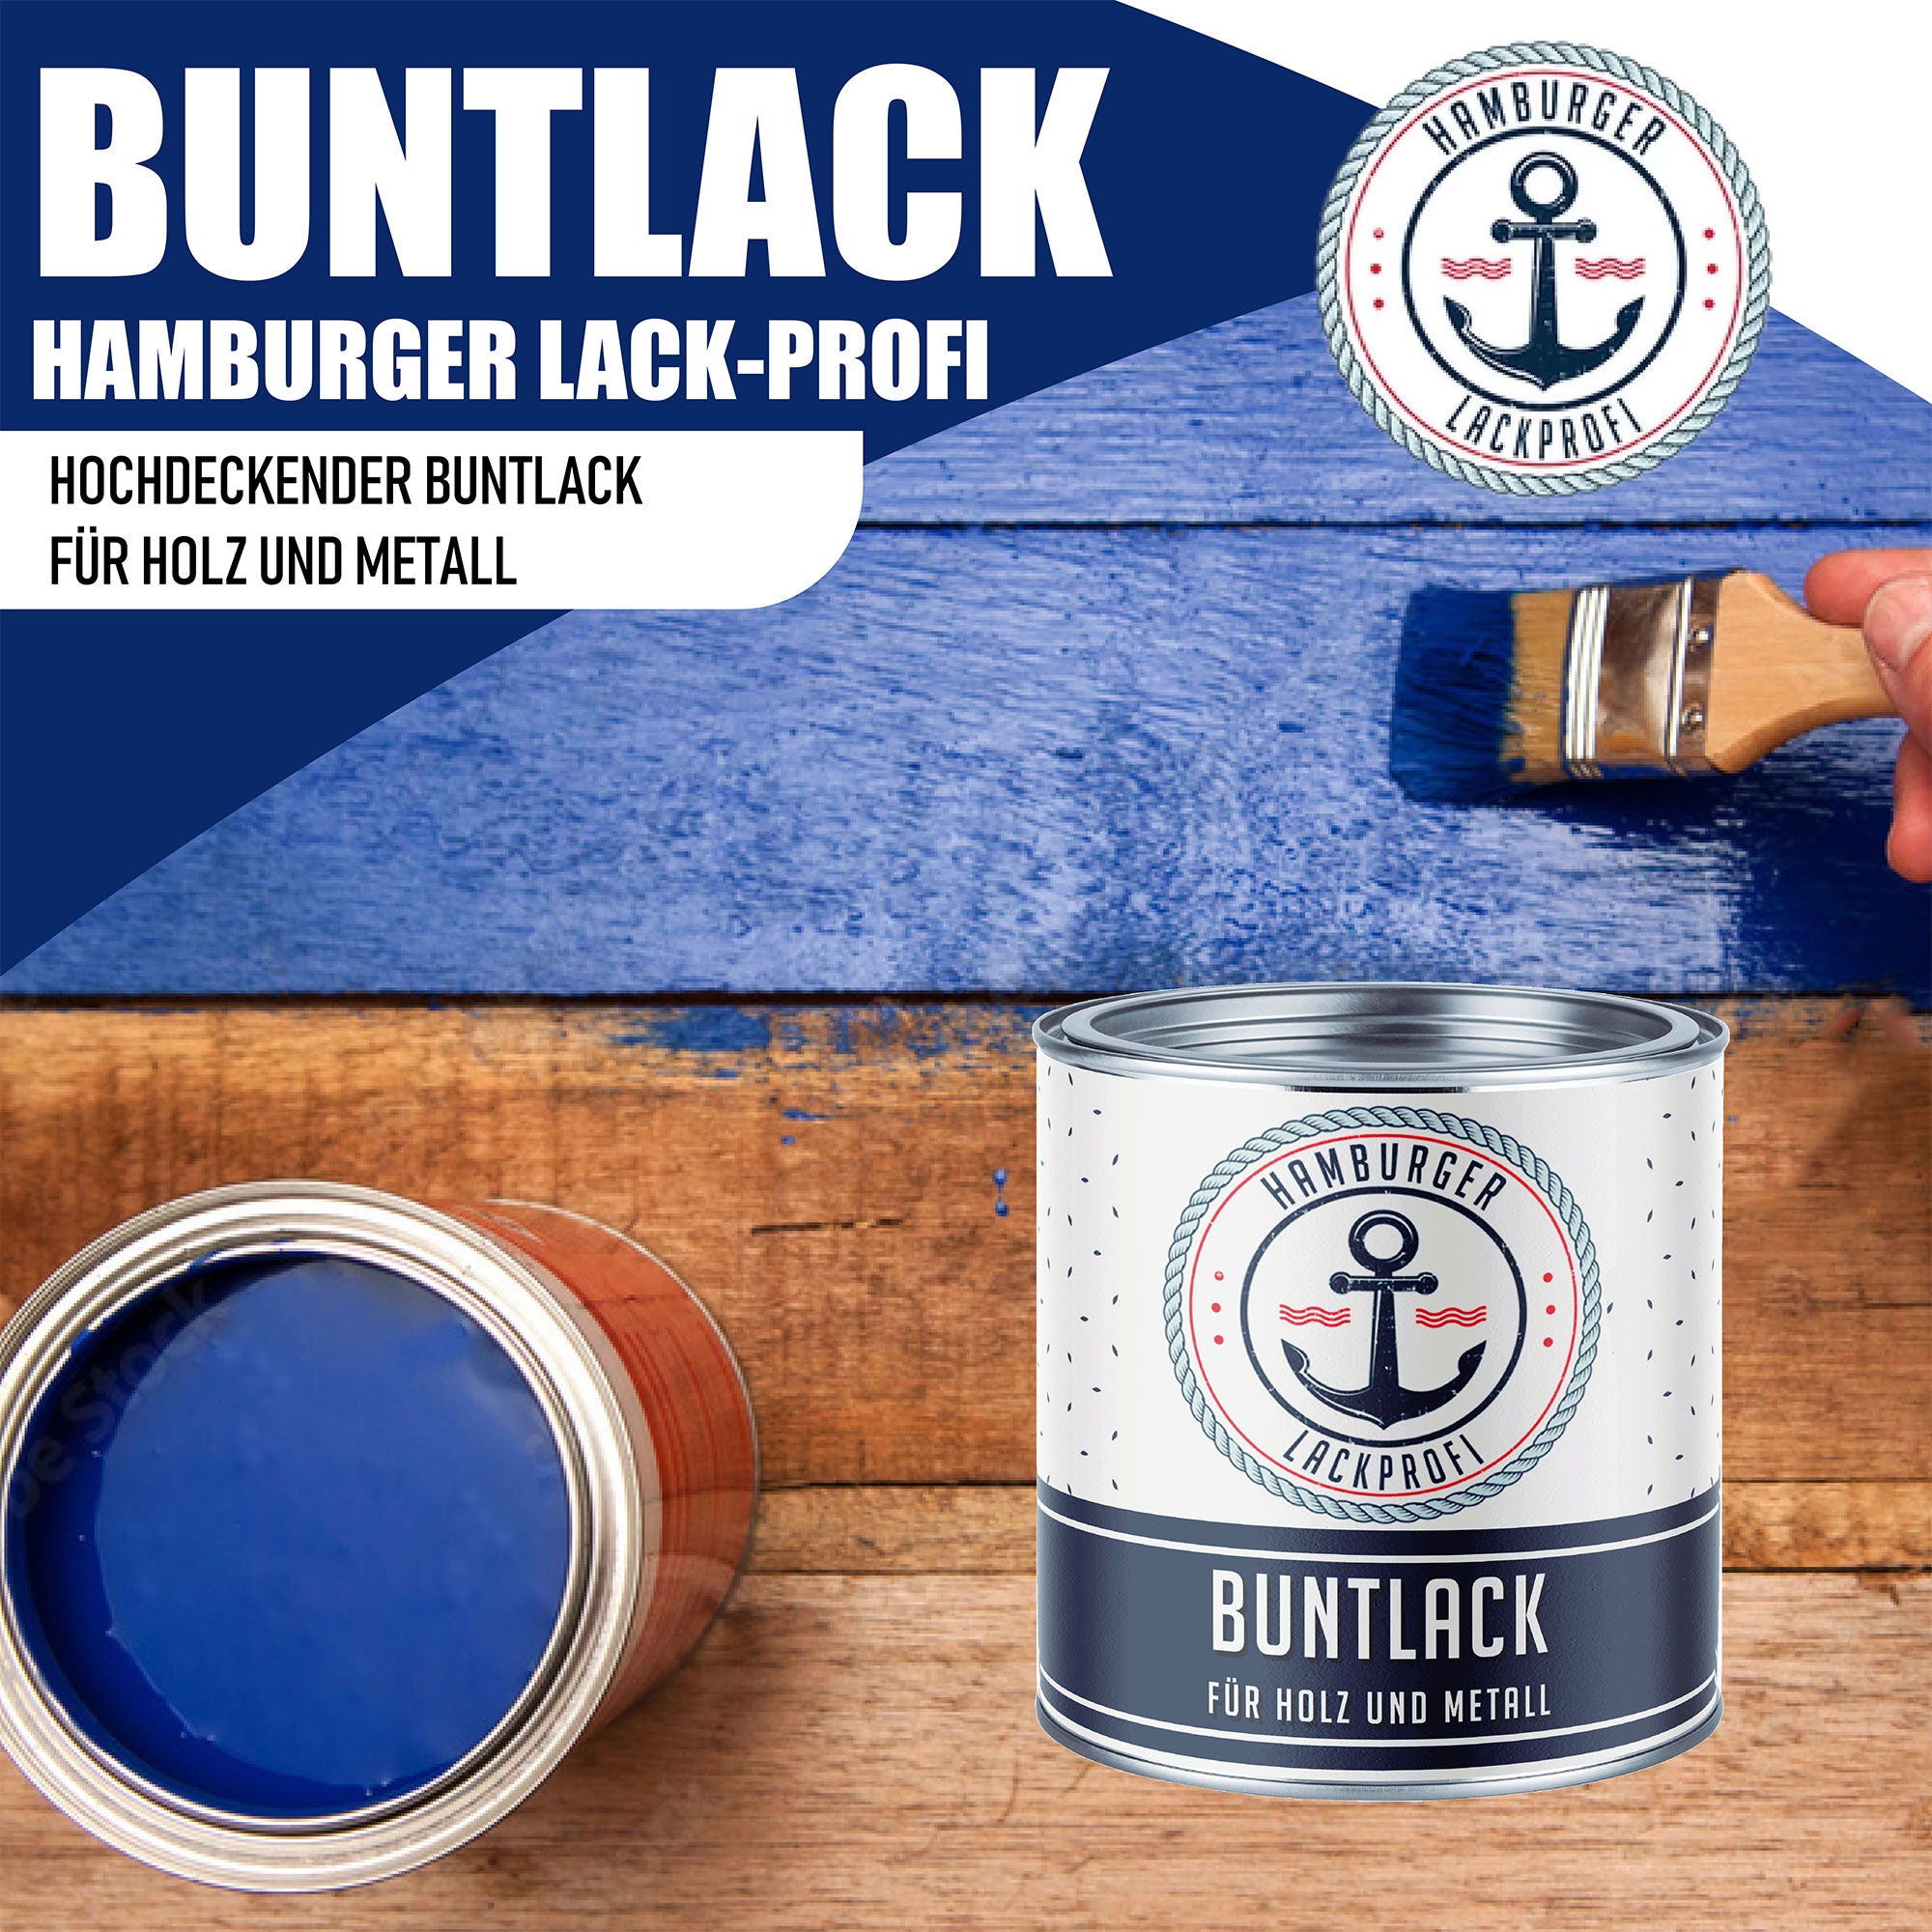 Hamburger Lack-Profi Buntlack Braunbeige RAL 1011 - Robuster Kunstharzlack - Hamburger Lack-Profi